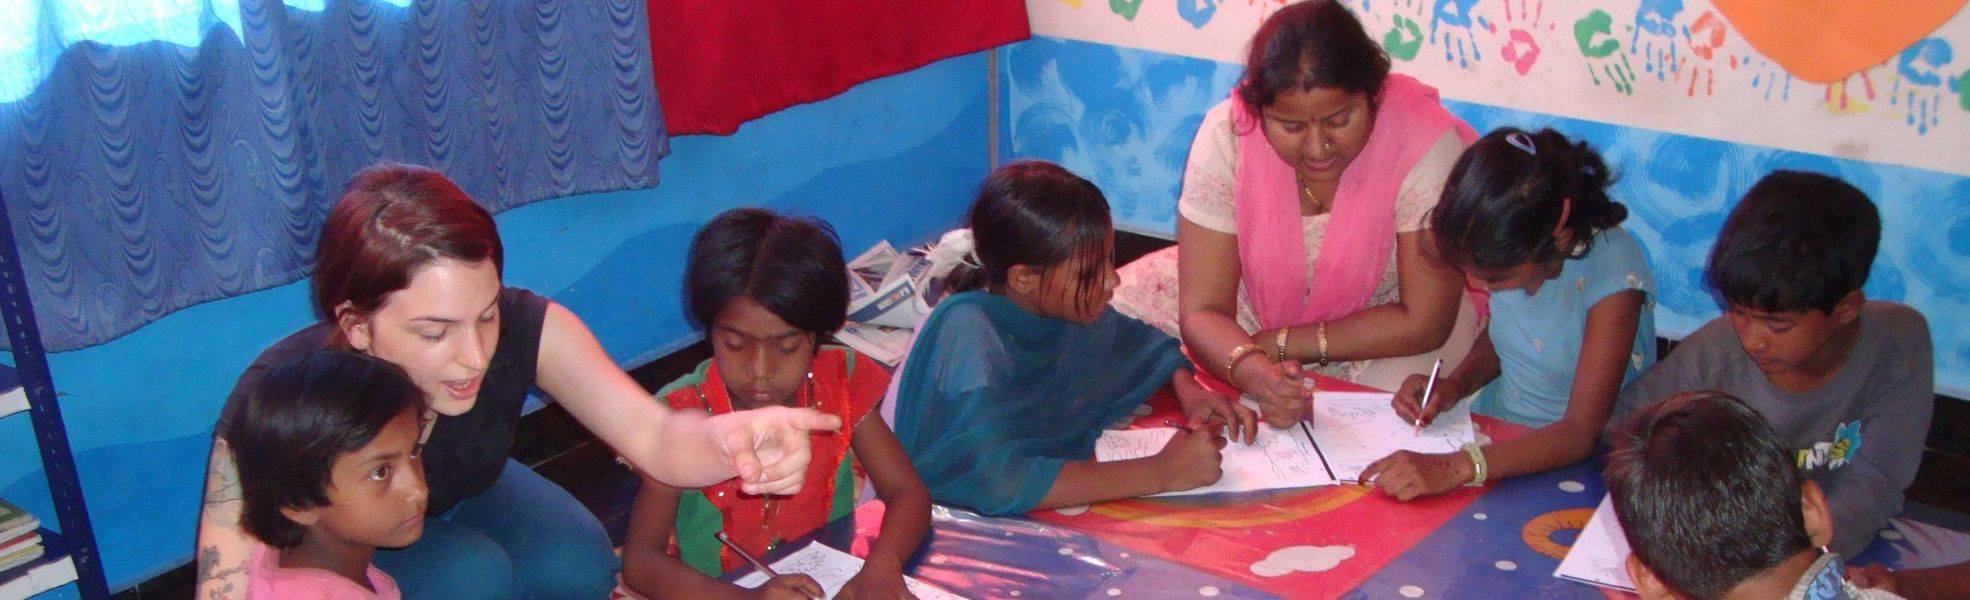 Volunteer on her internship abroad in India with children